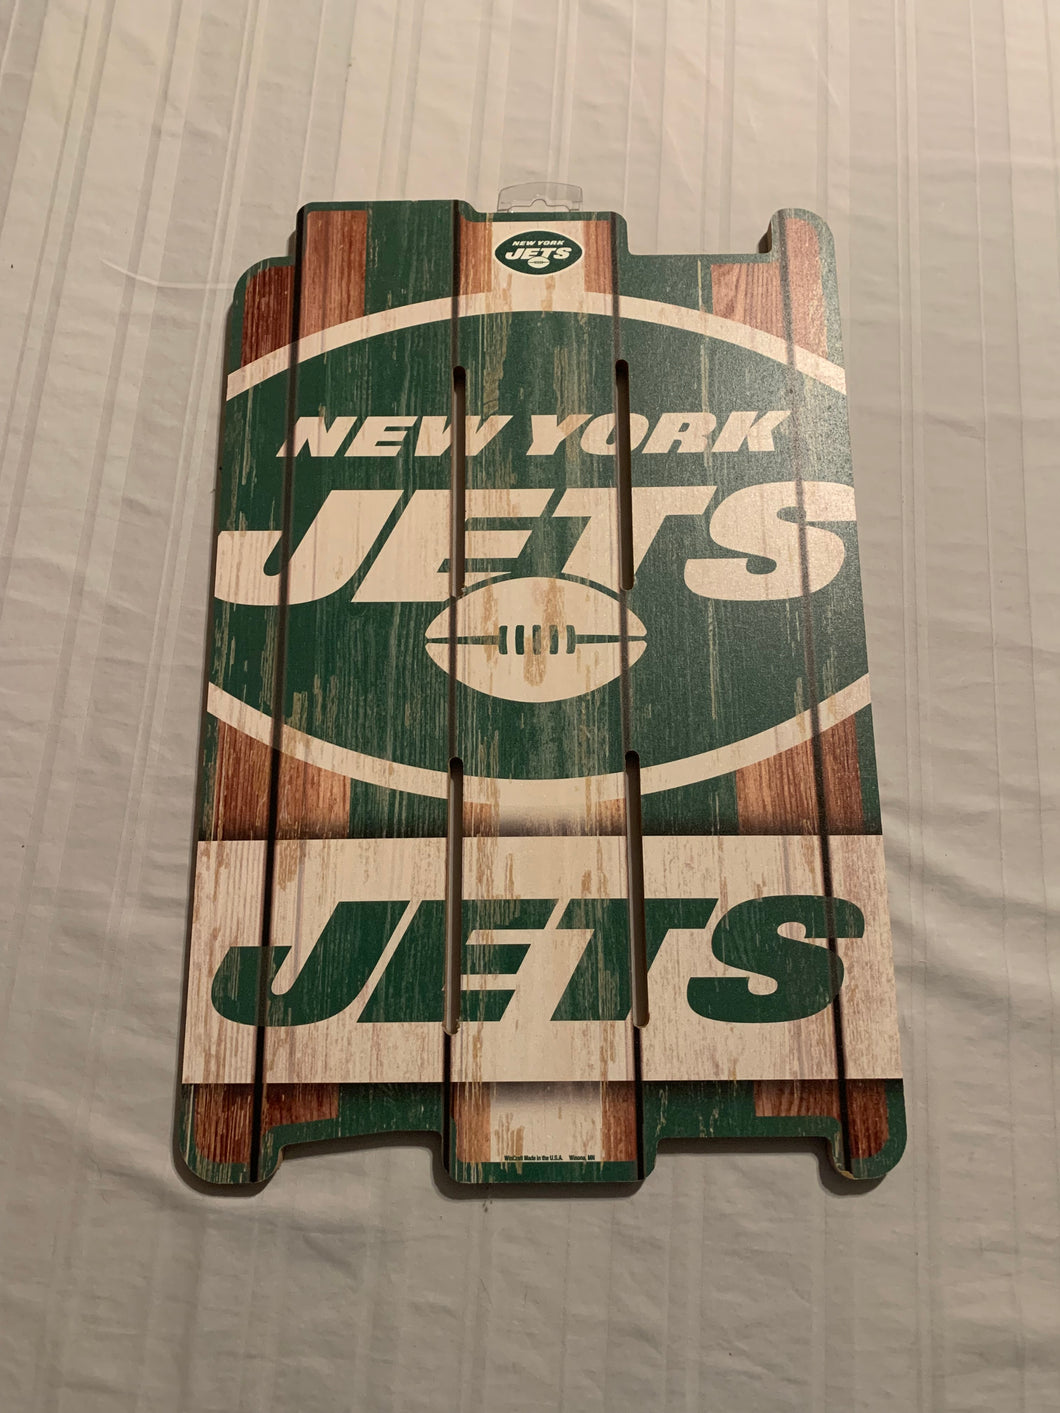 New York Jets NFL 17